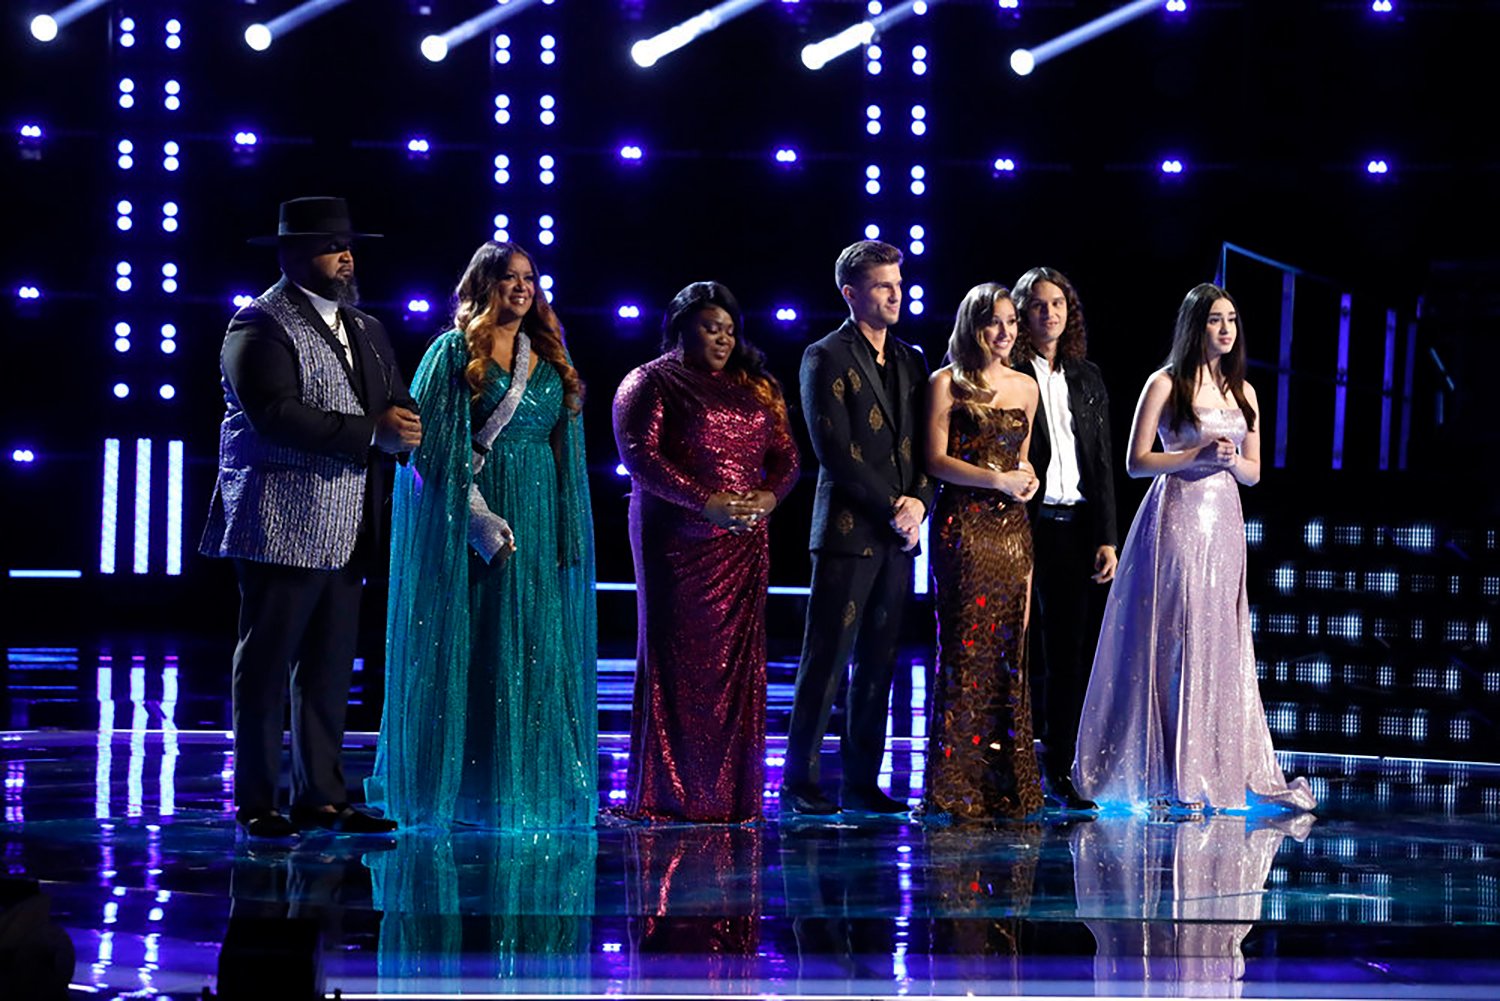 The Voice Season 21 contestants Paris Winningham, Wendy Moten, Jershika Maple, Girl Named Tom, and Hailey Mia